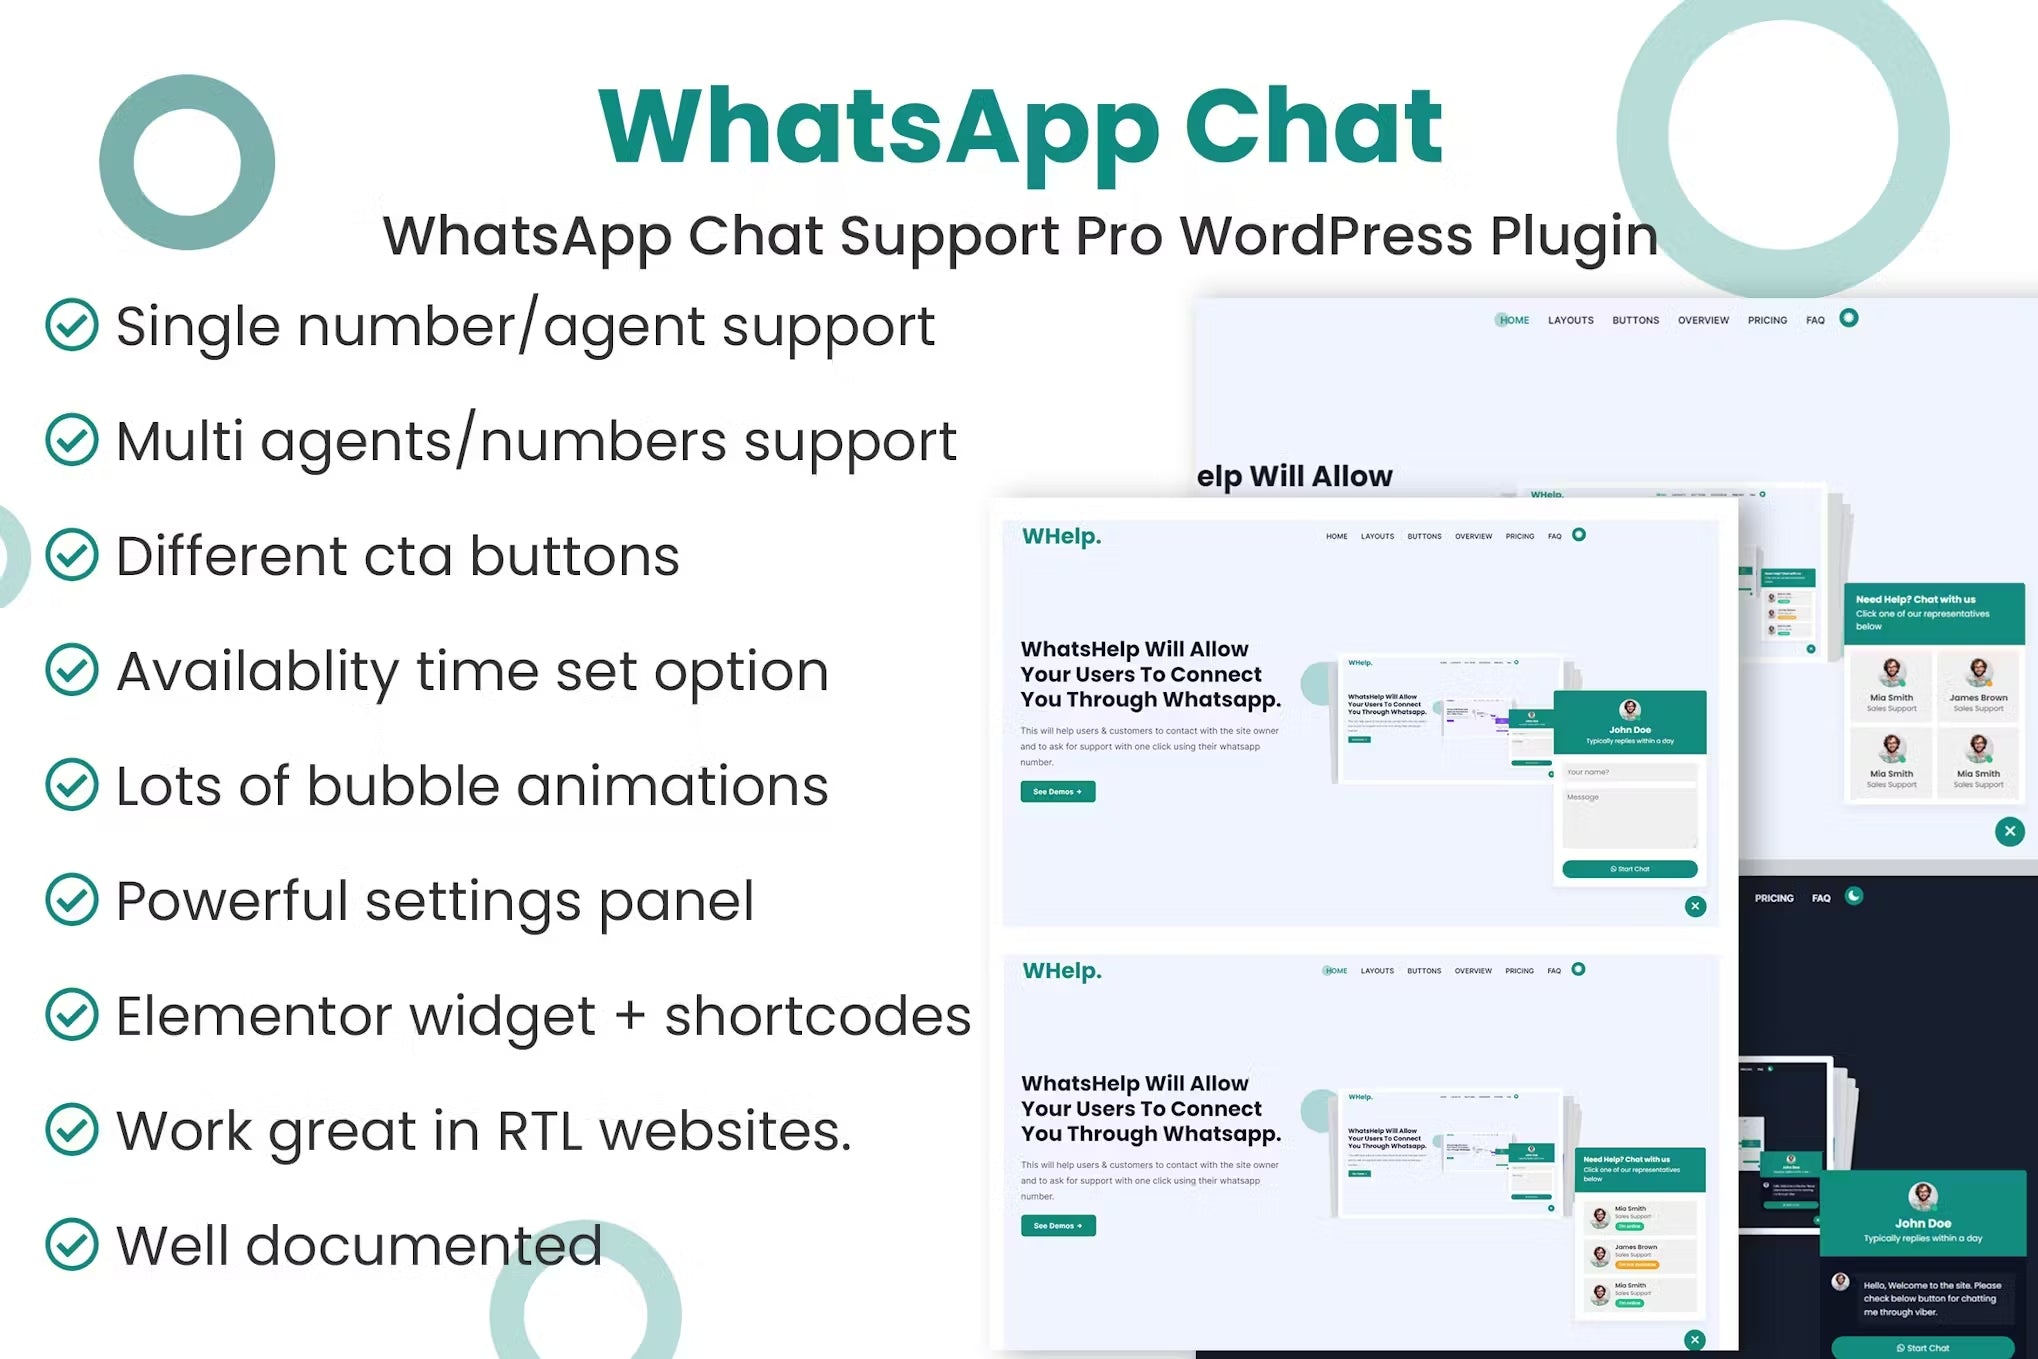 WhatsApp Chat Support Pro WordPress Plugin by exstore